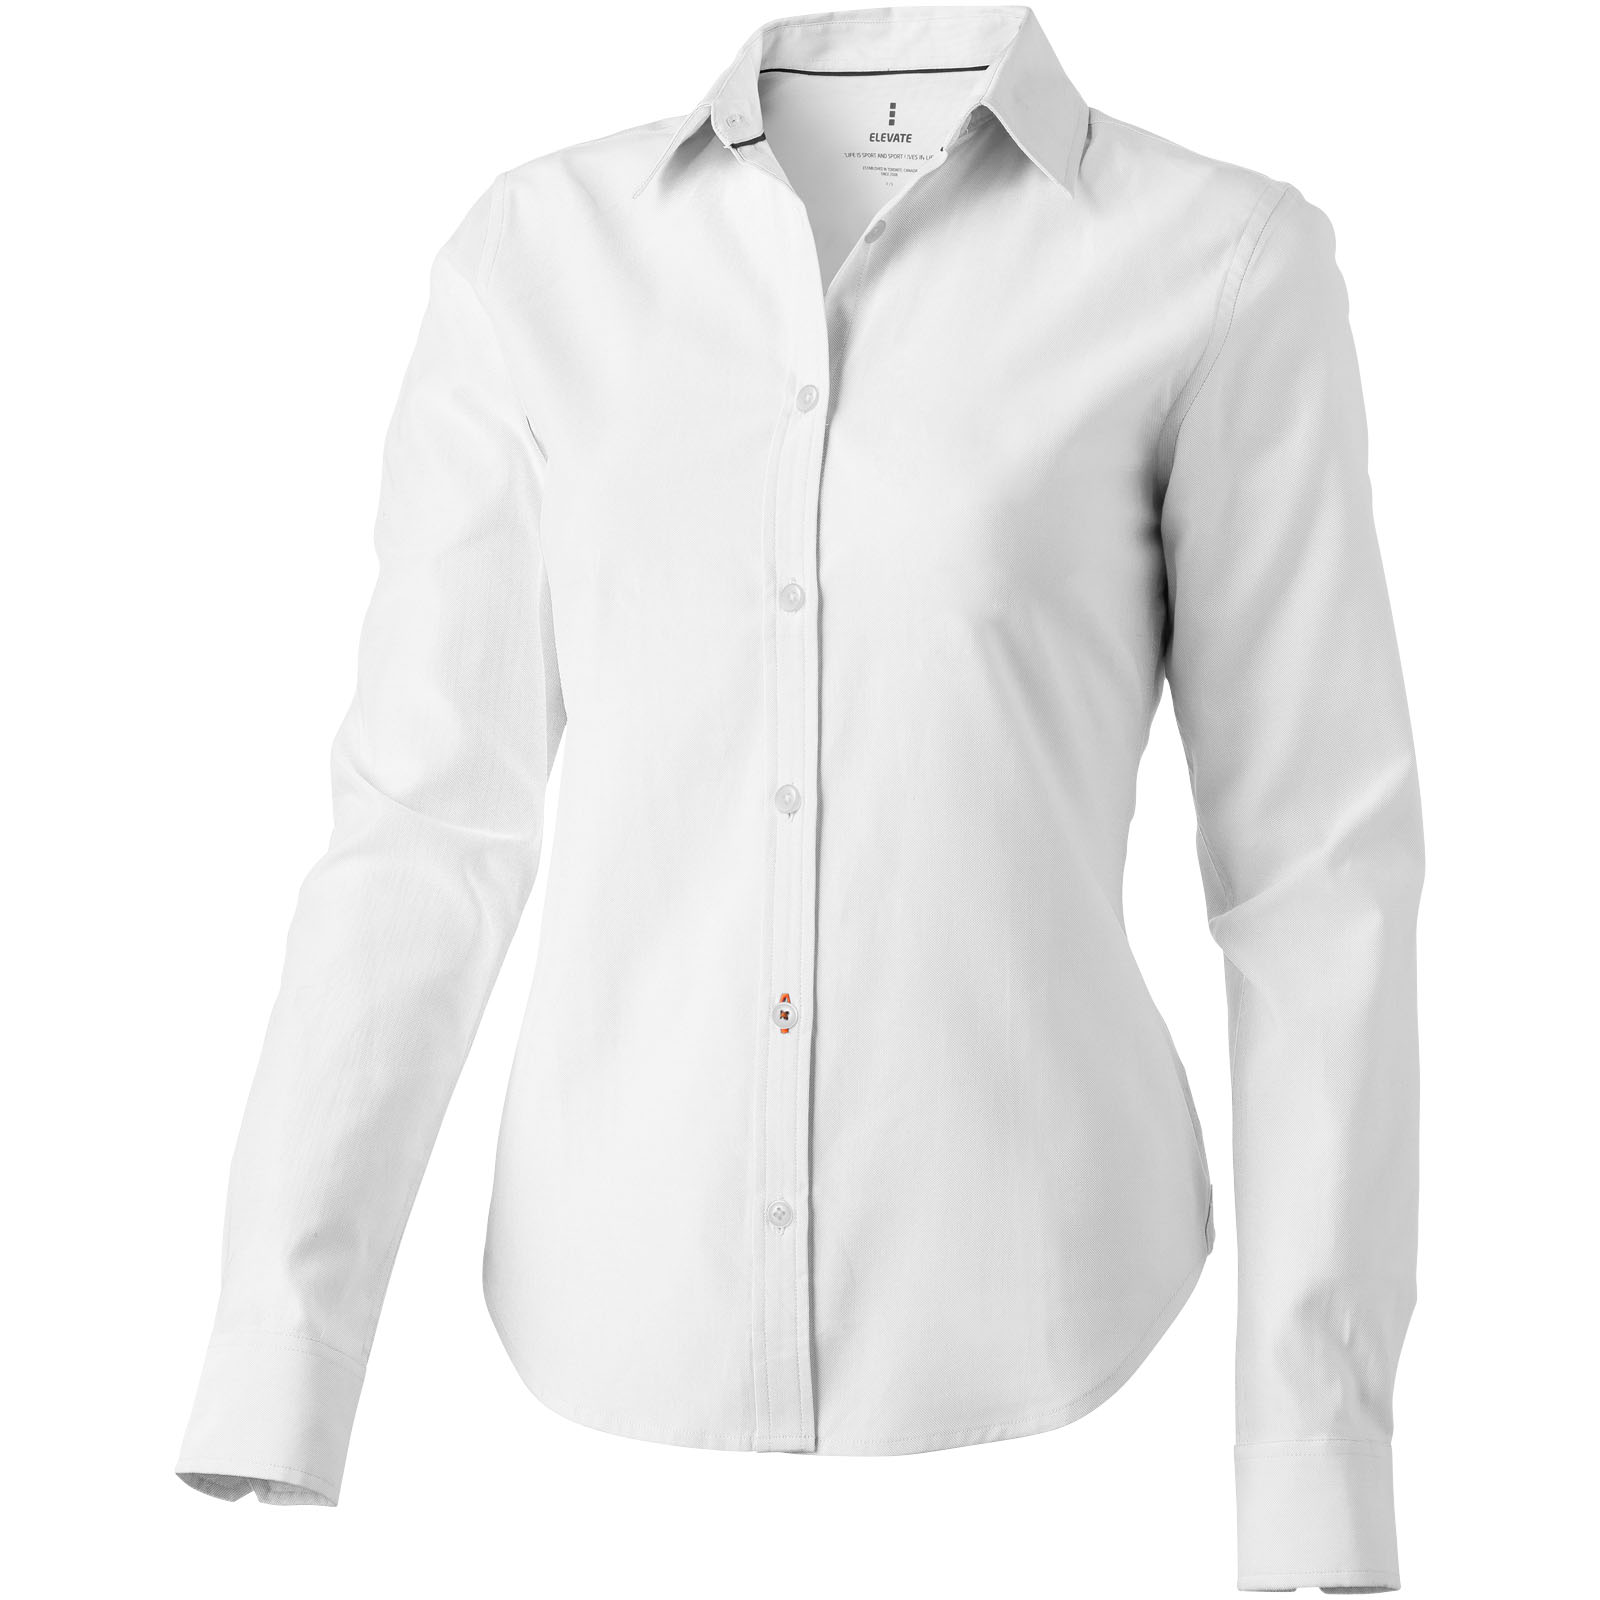 Shirts - Vaillant long sleeve women's oxford shirt